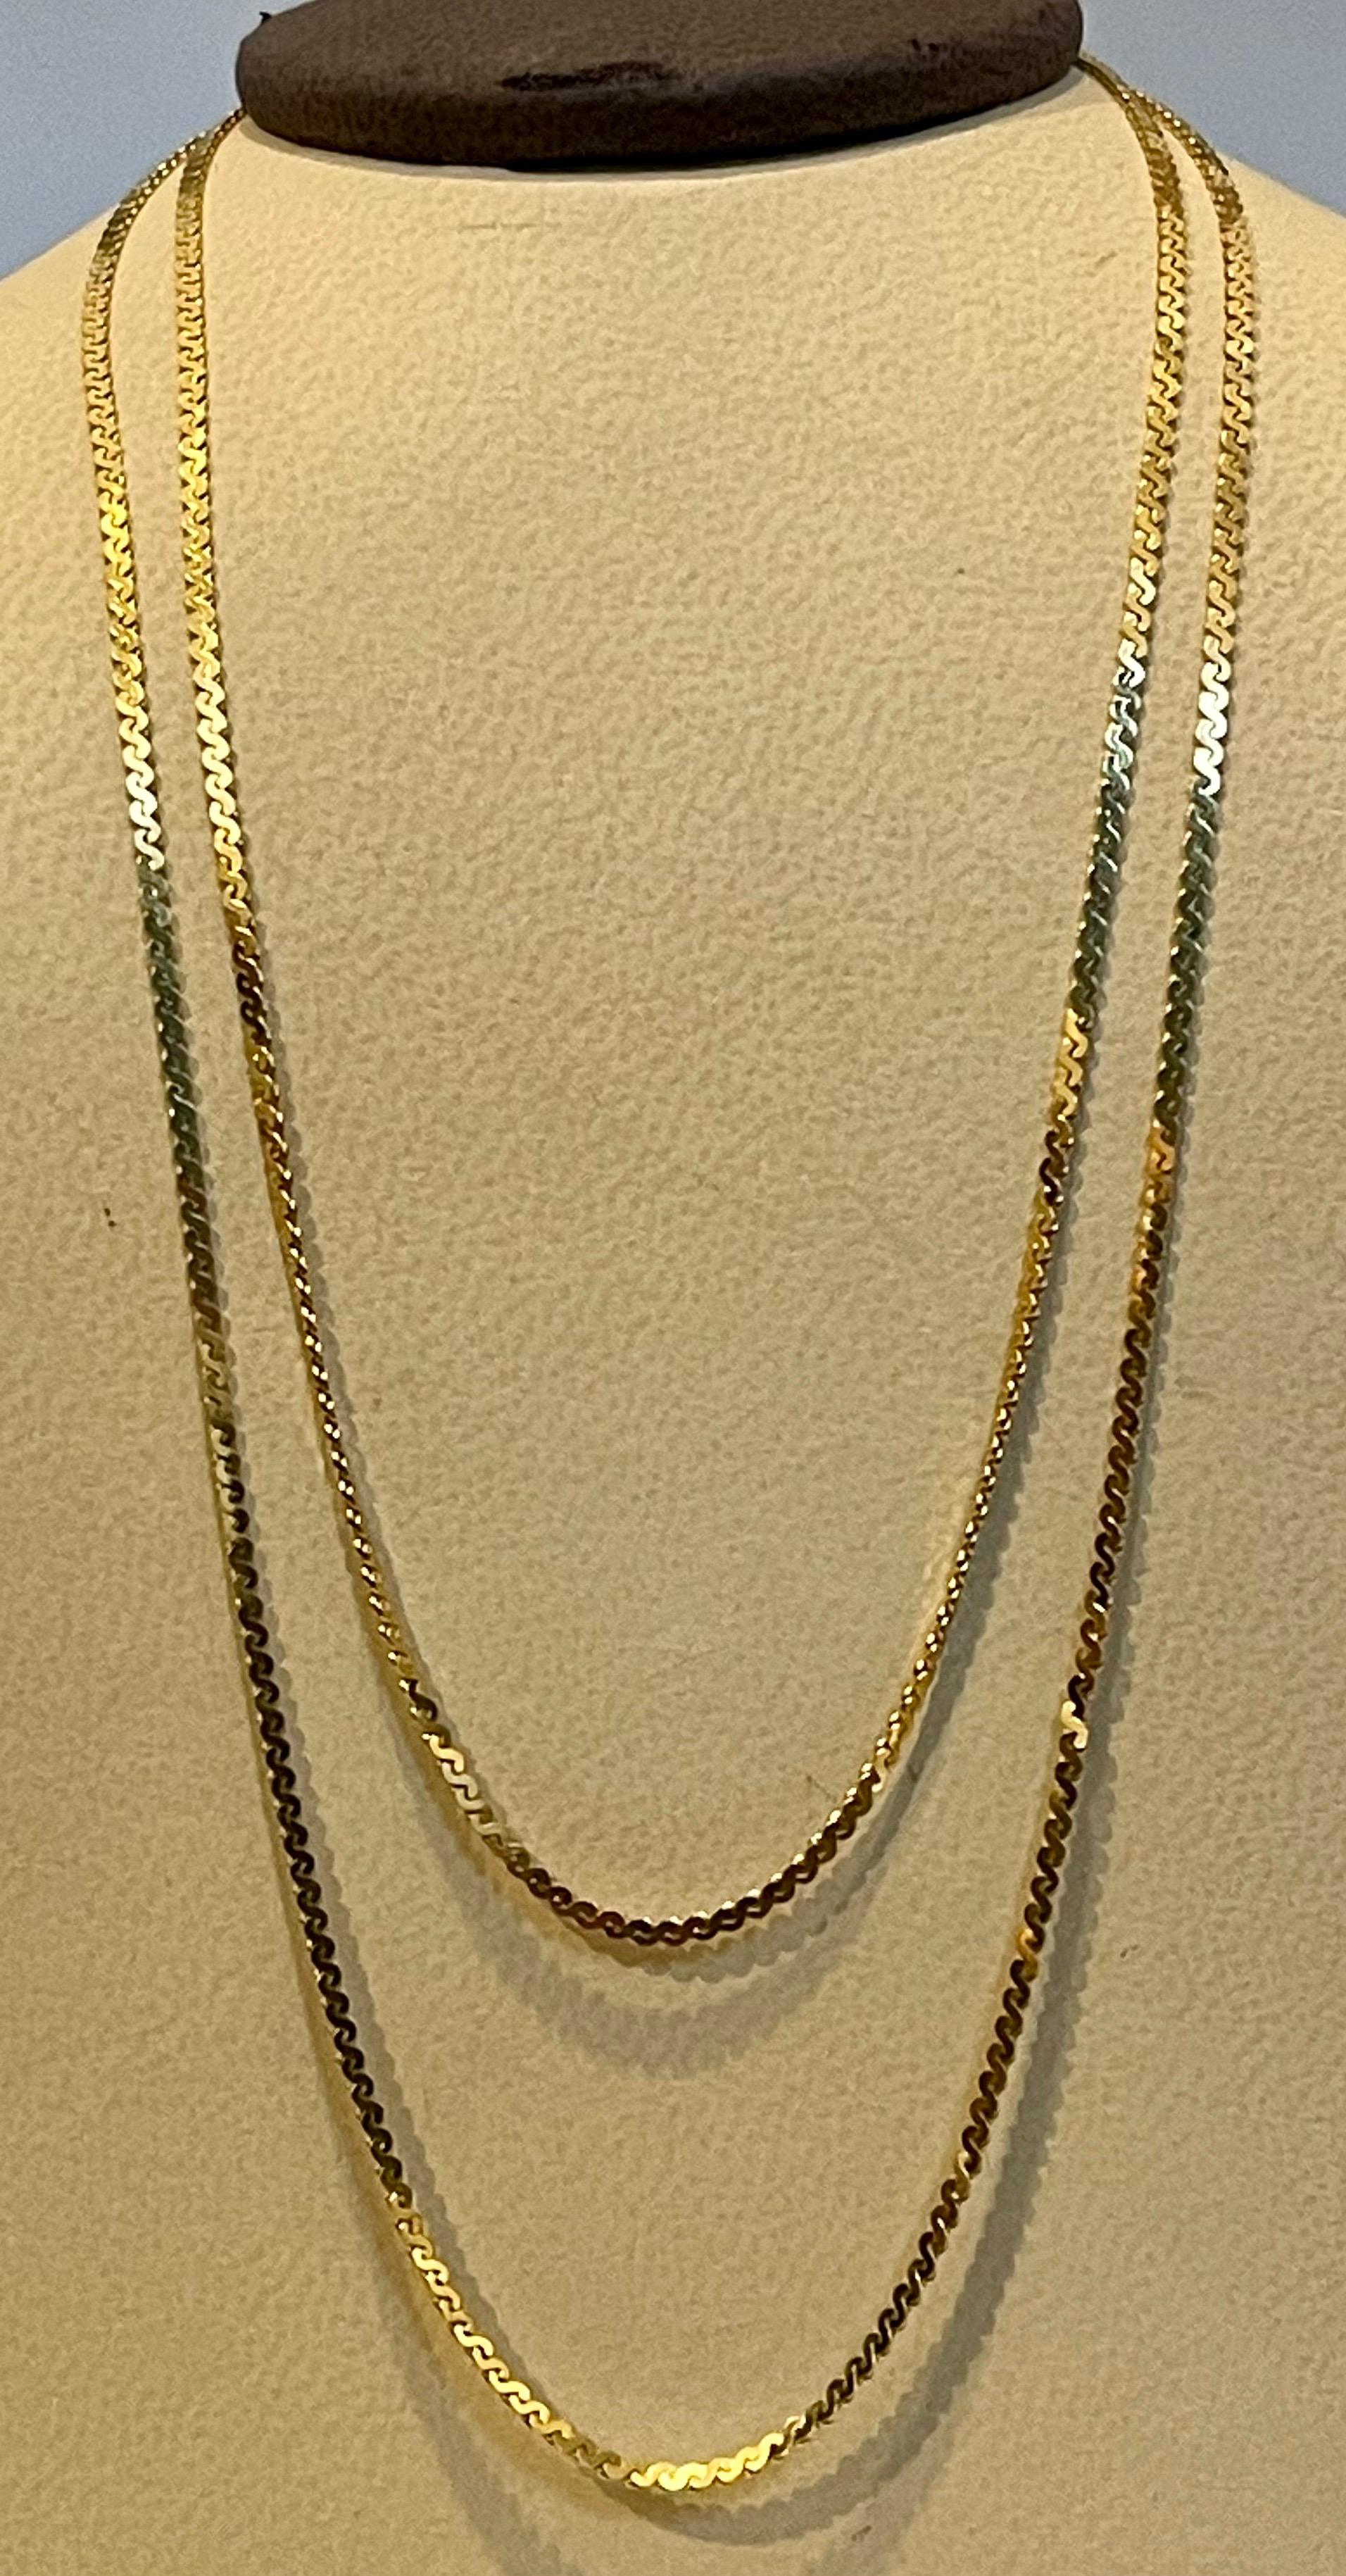 8gm gold chain